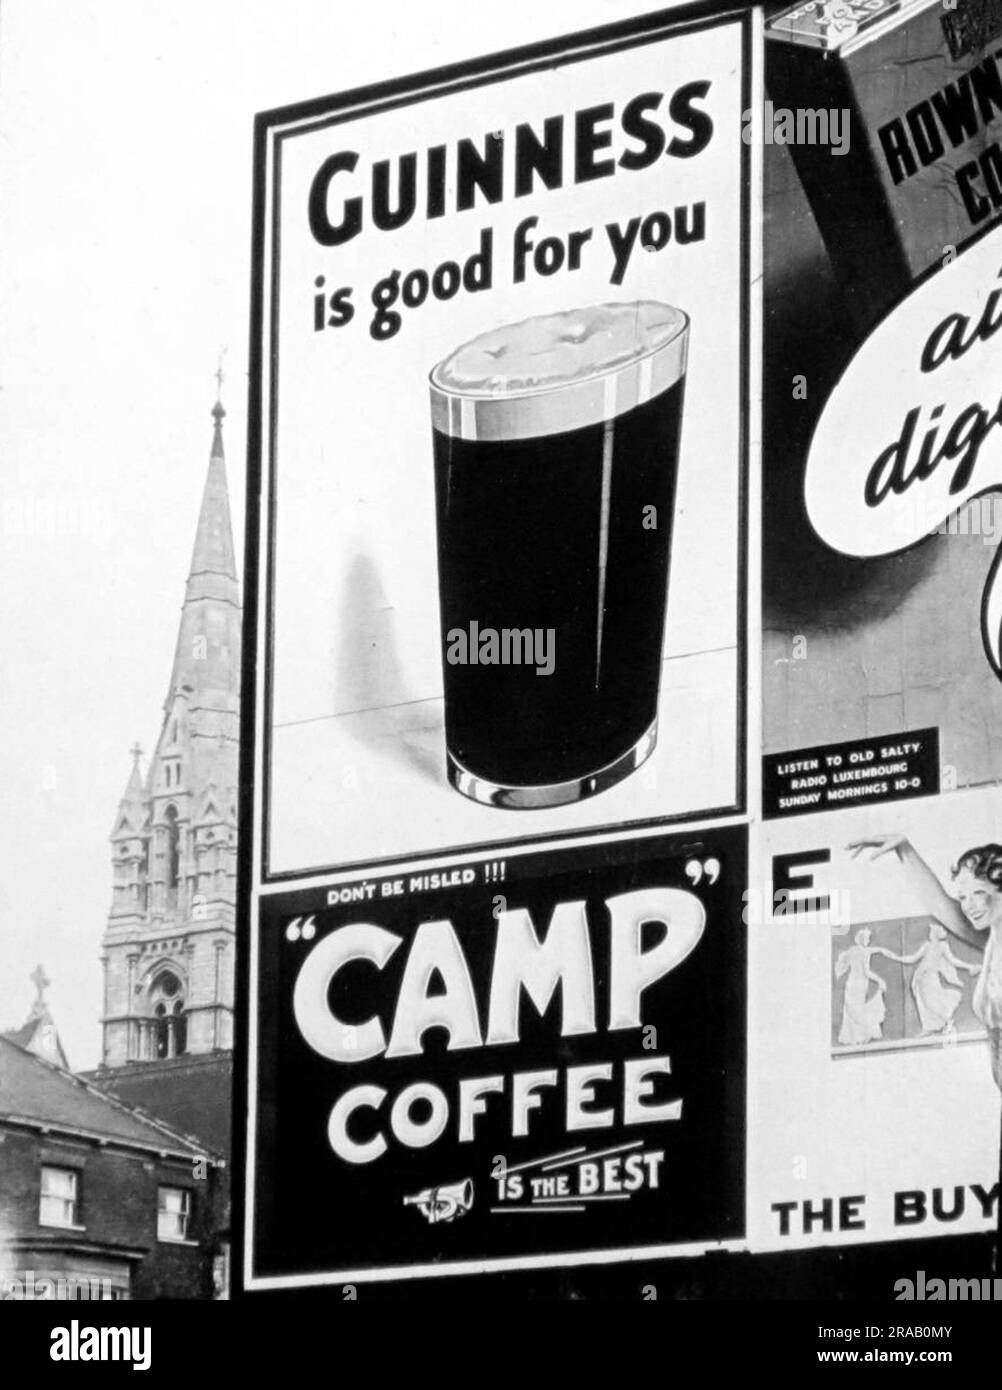 Accumulazione pubblicitaria per Guinness e Camp Coffee, forse anni '1930 Foto Stock